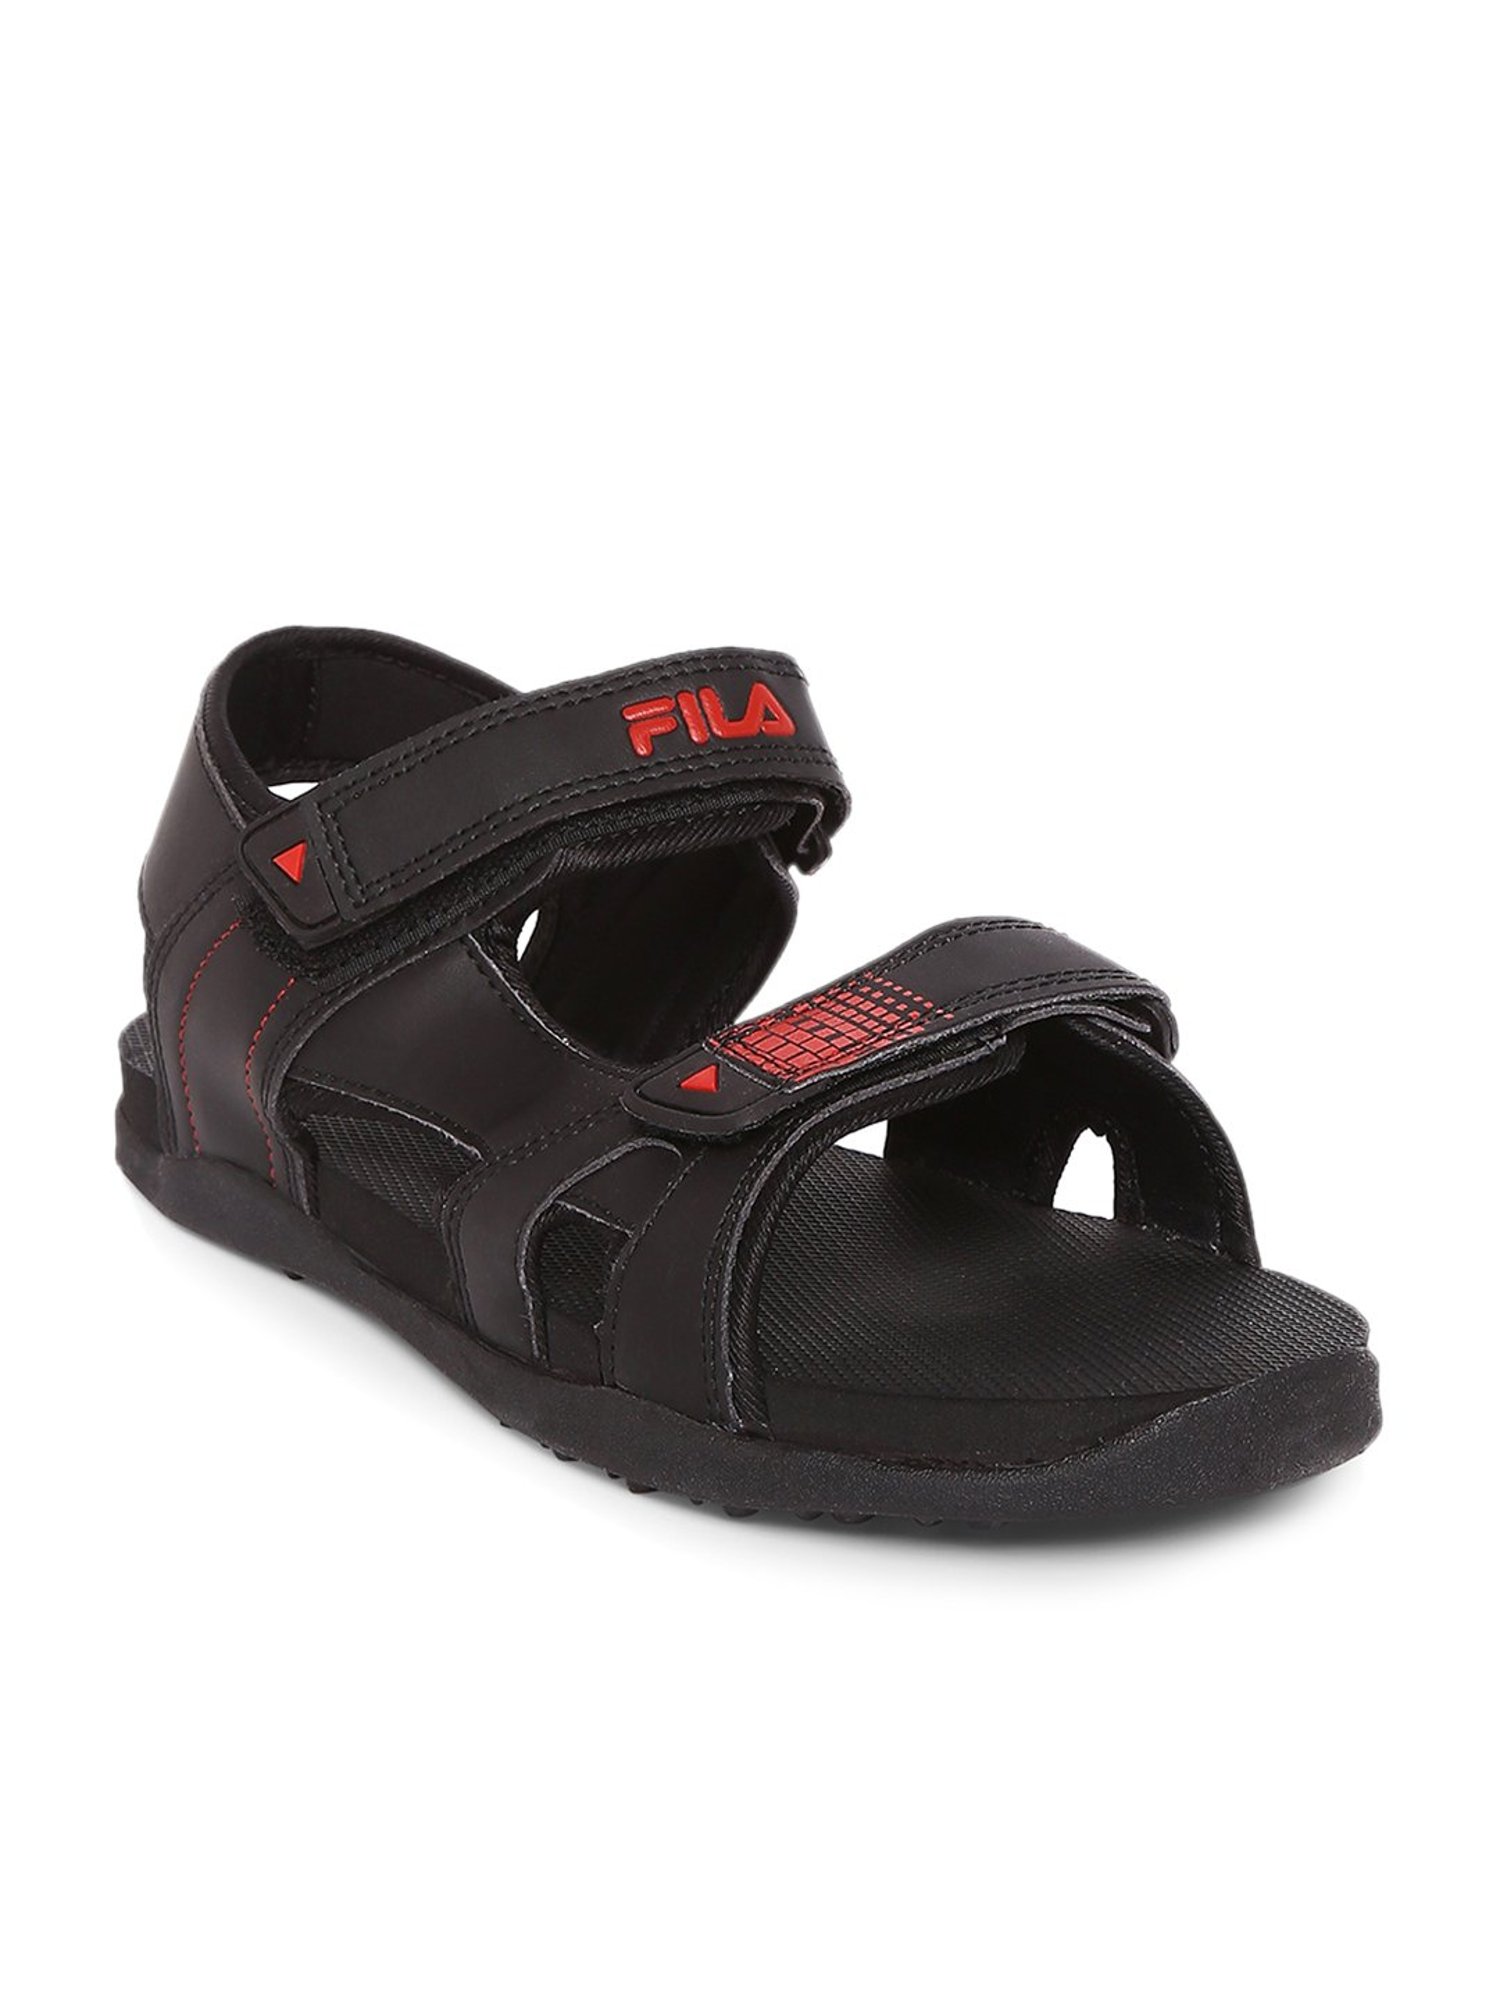 Fila Faux Leather Sandals for Men | Mercari